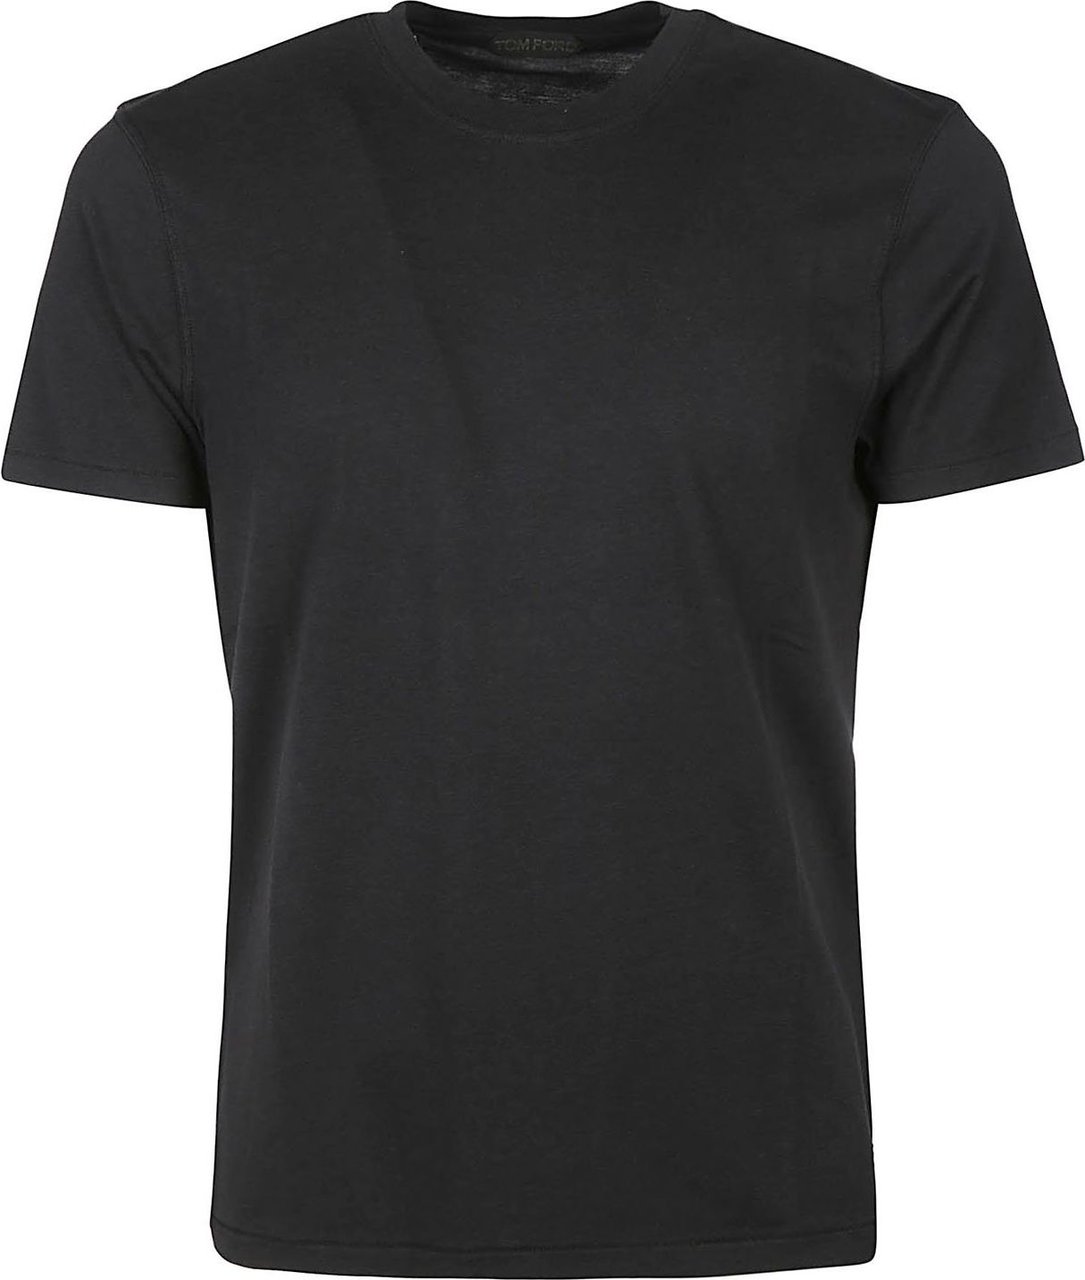 Tom Ford T-shirt Black Zwart